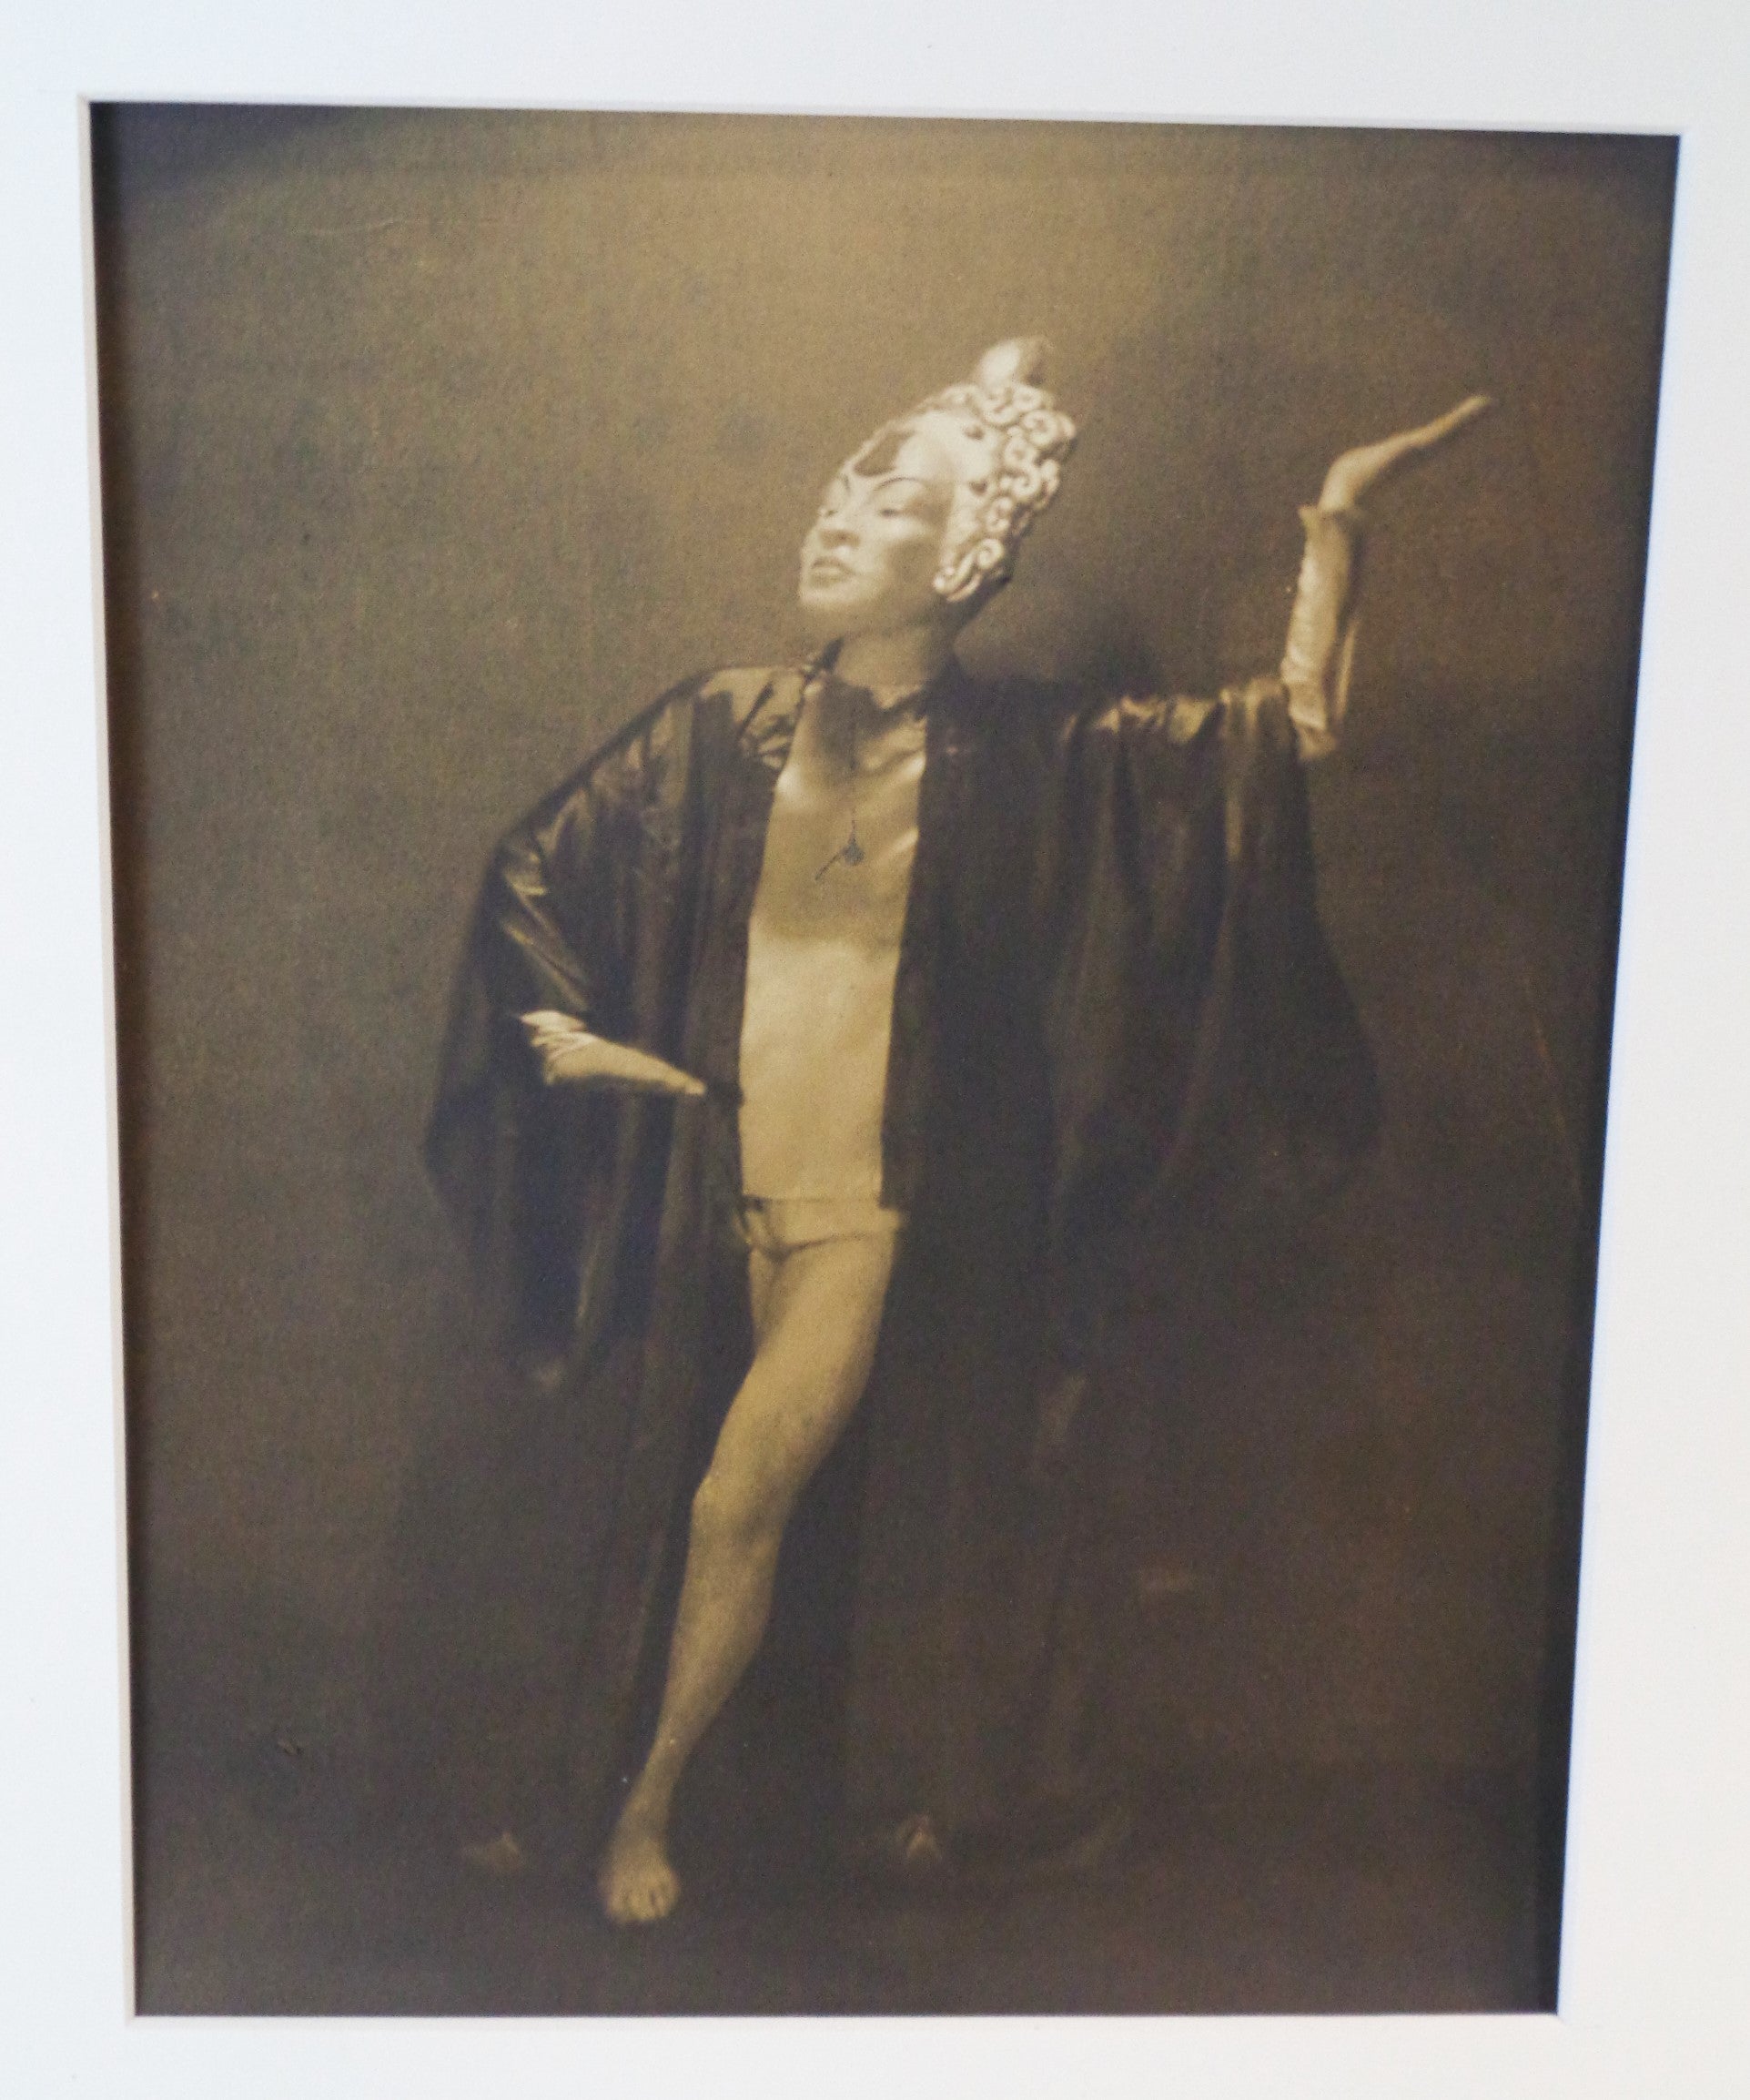 Paper Original Pictorialist Sepia Tone Gelatin Silver Print Photograph Exotic Dancer For Sale